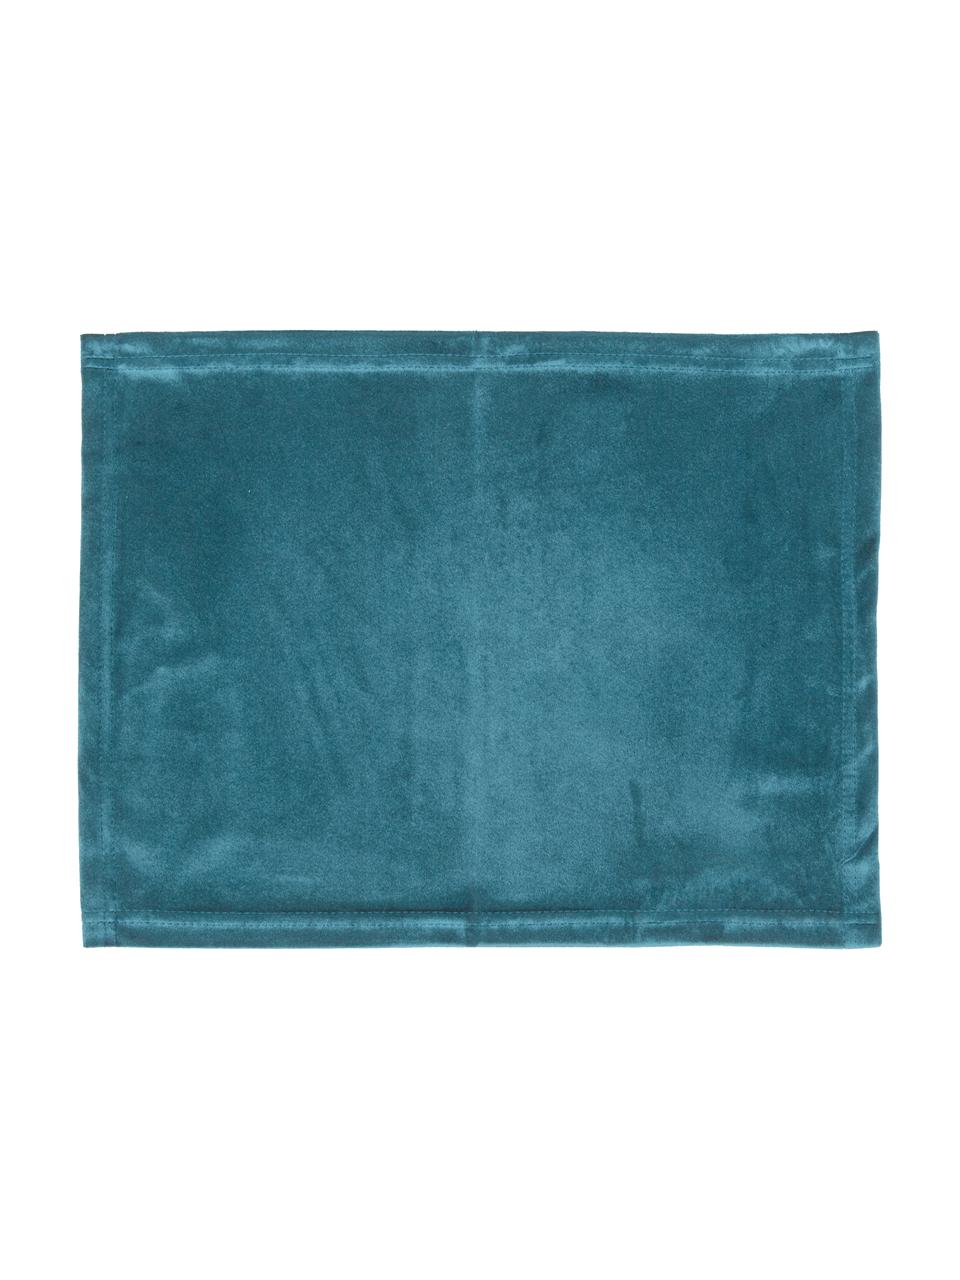 Samt-Tischsets Simone, 2 Stück, 100% Polyestersamt, Jadegrün, 35 x 45 cm